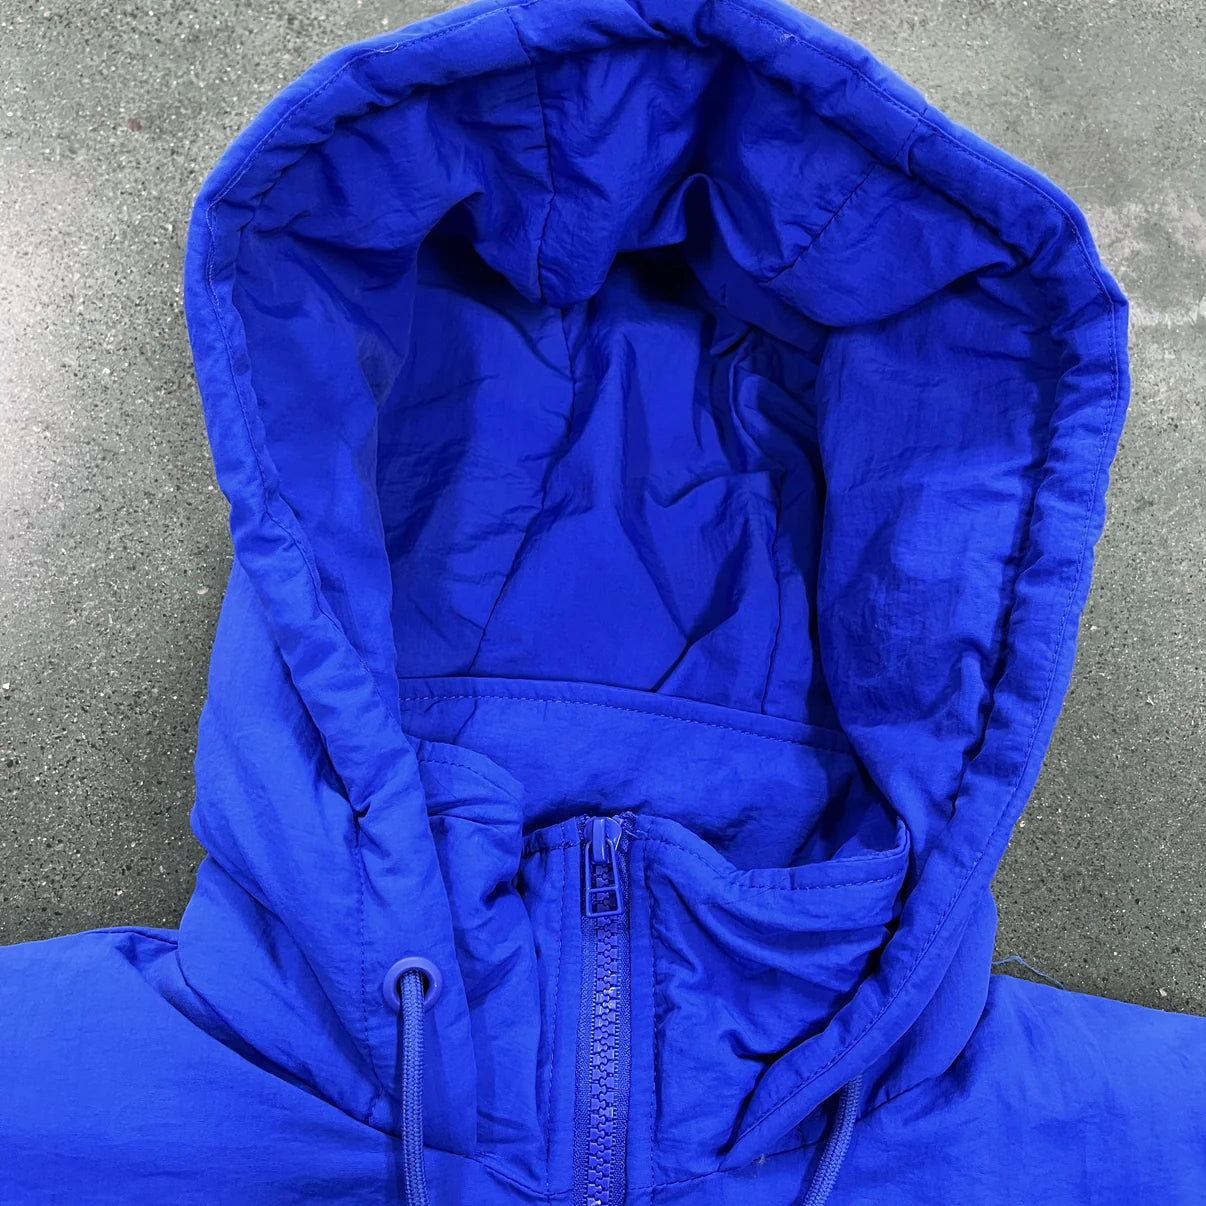 TS 14 Zip Pullover Jacket - Blue